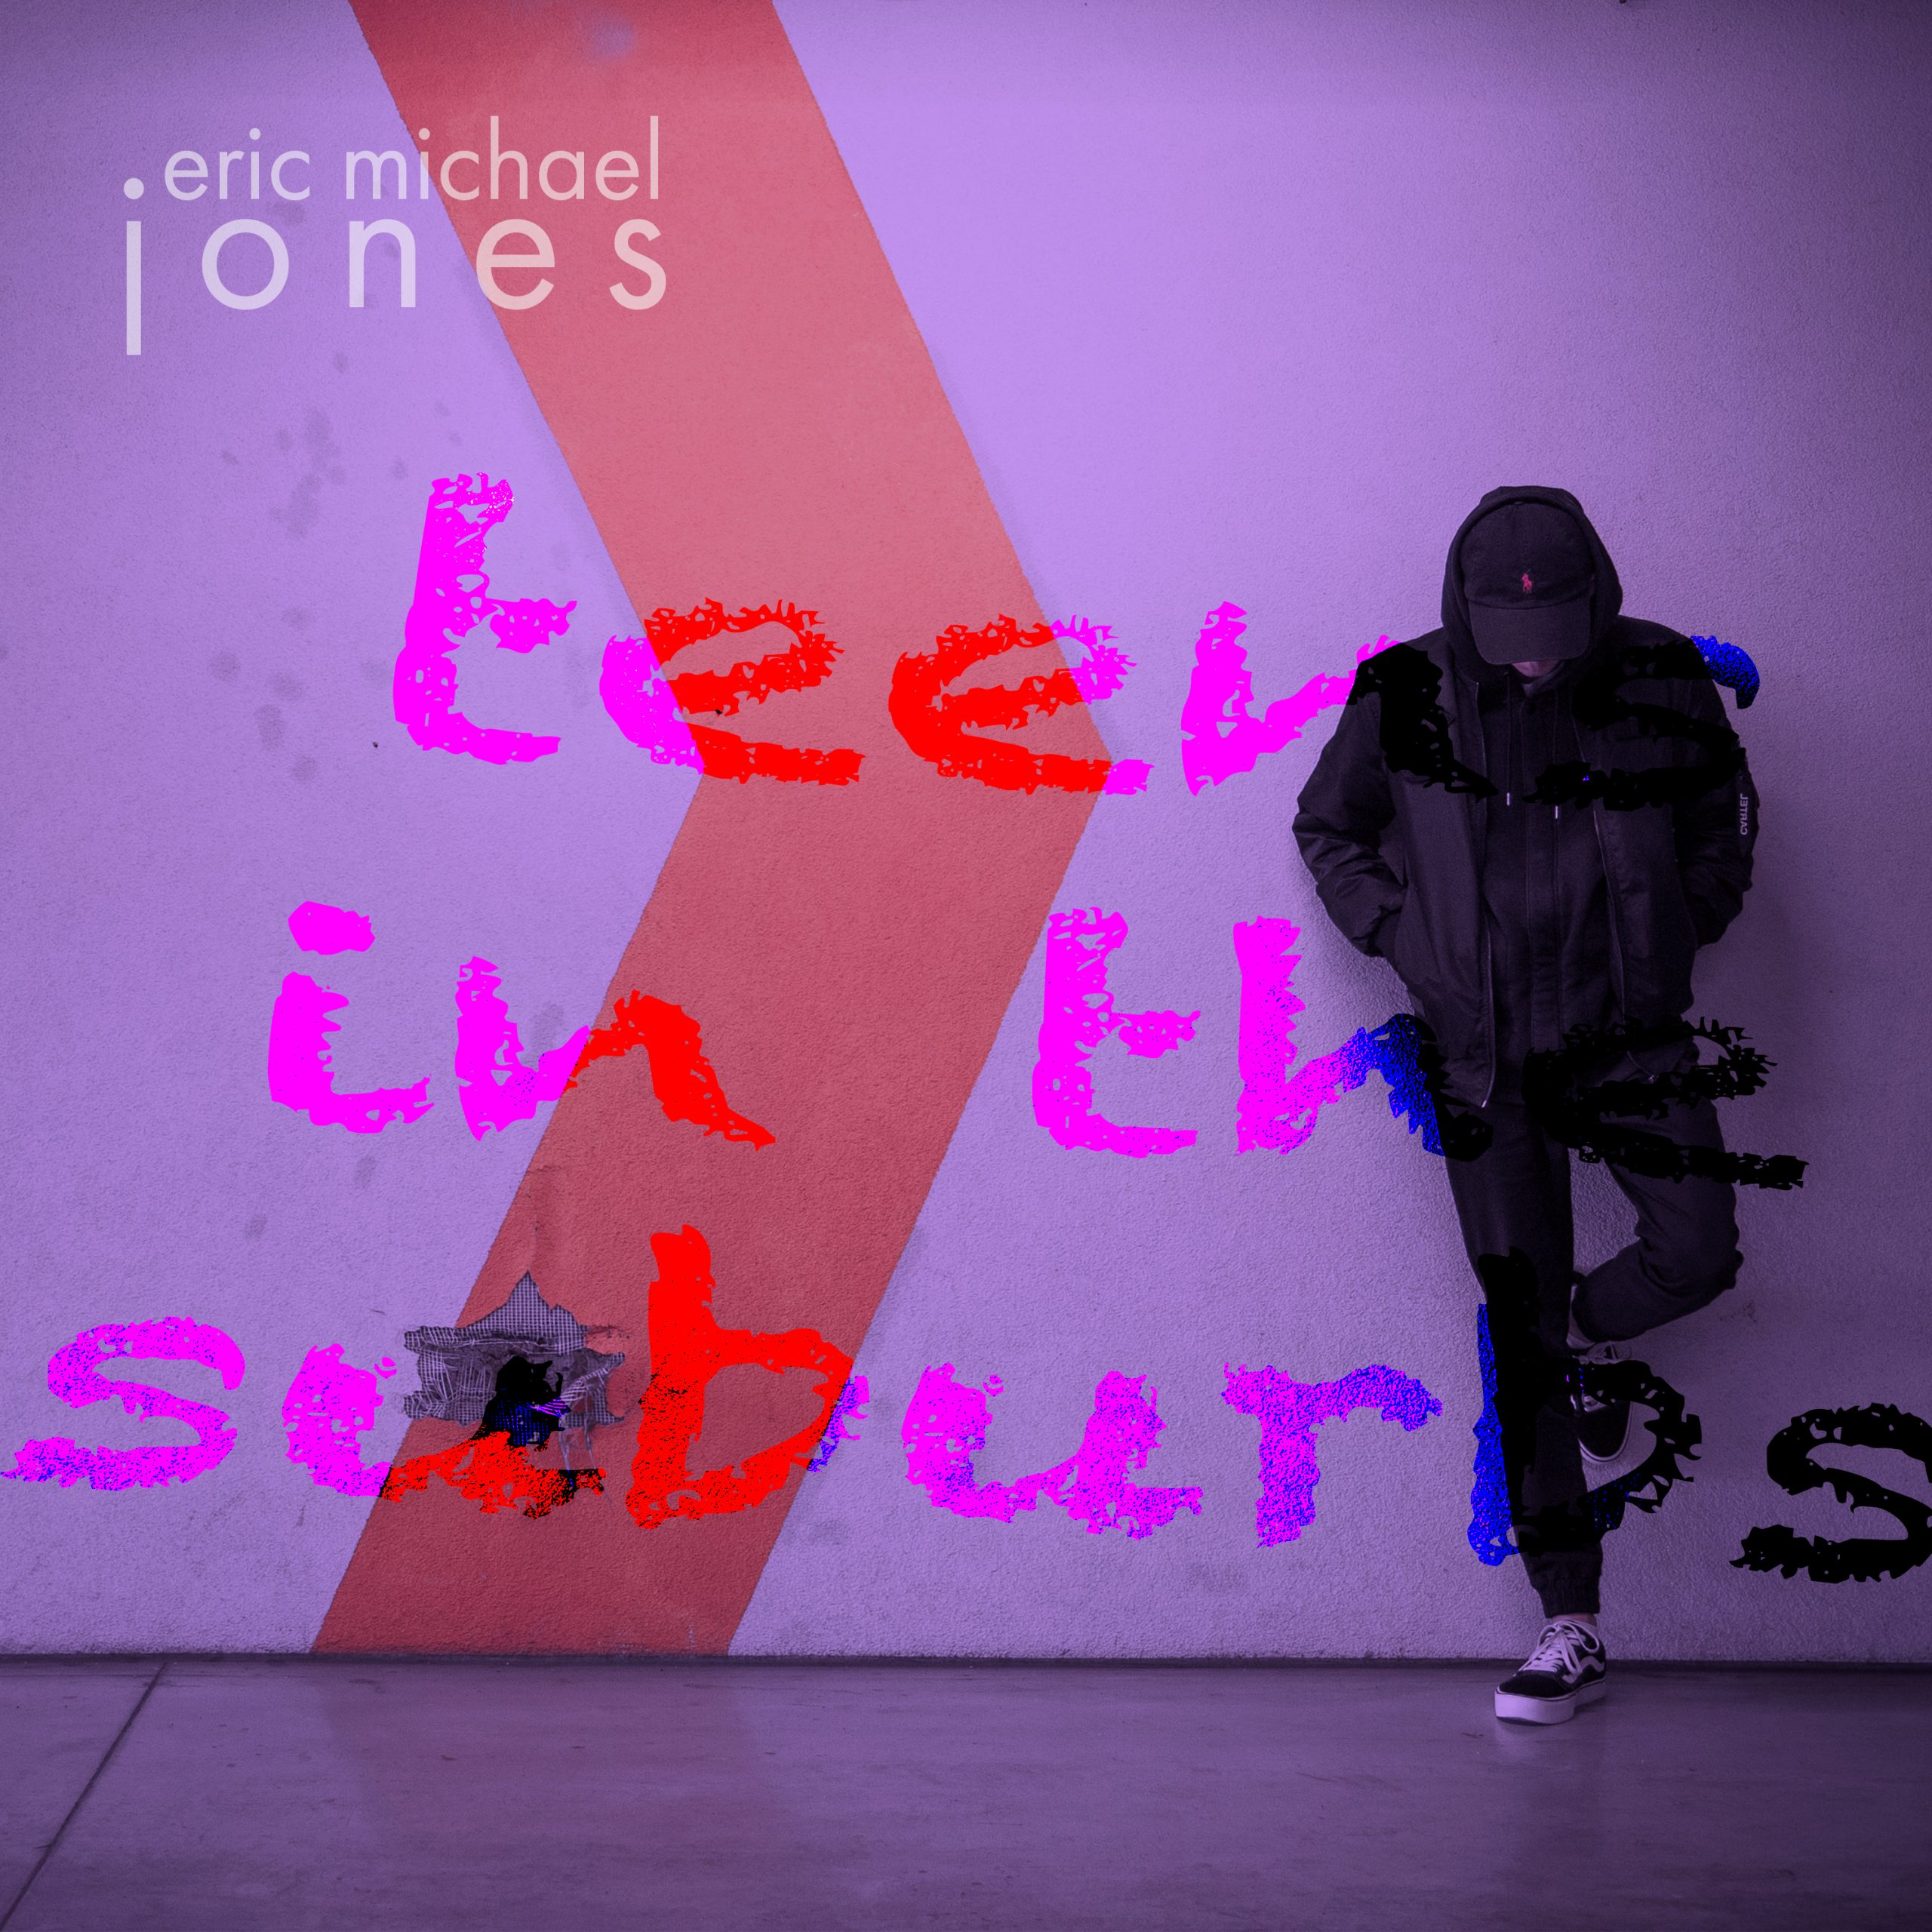 Teens In The Suburbs by Eric Michael Jones